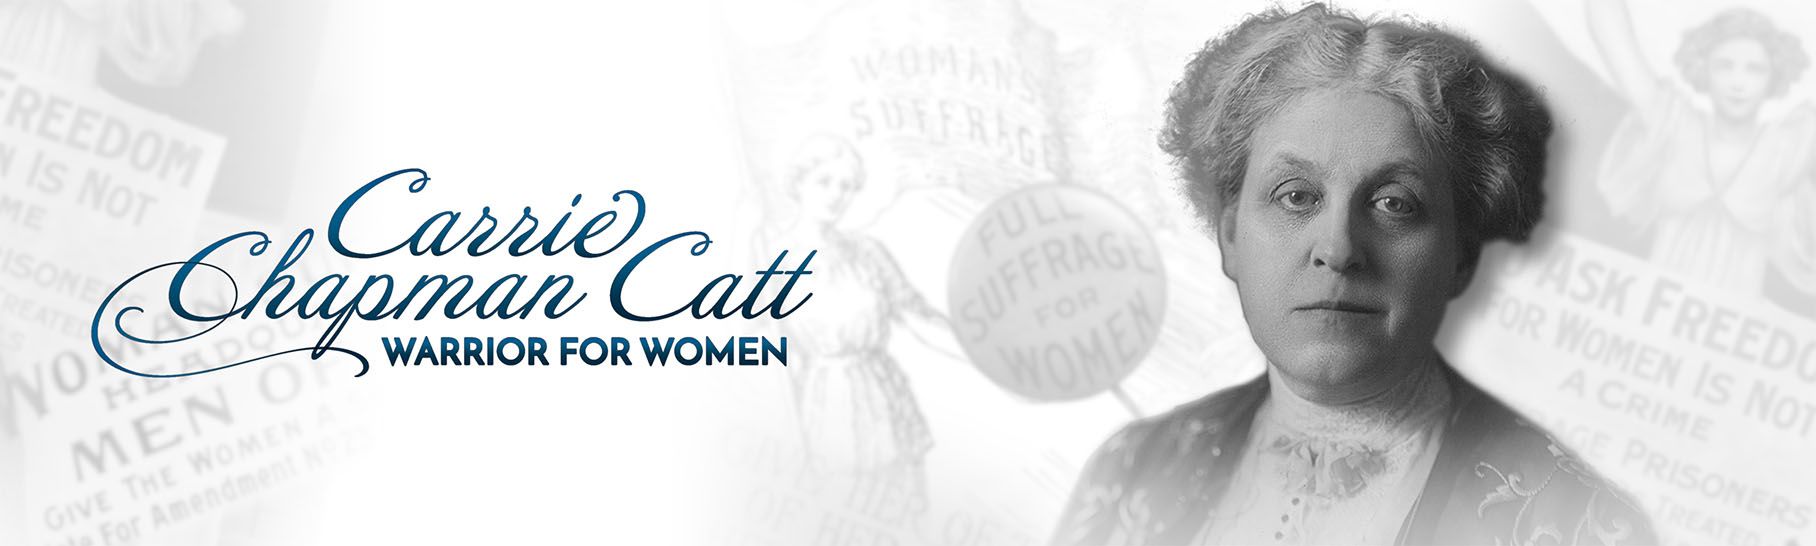 Carrie Chapman Catt: Warrior for Women